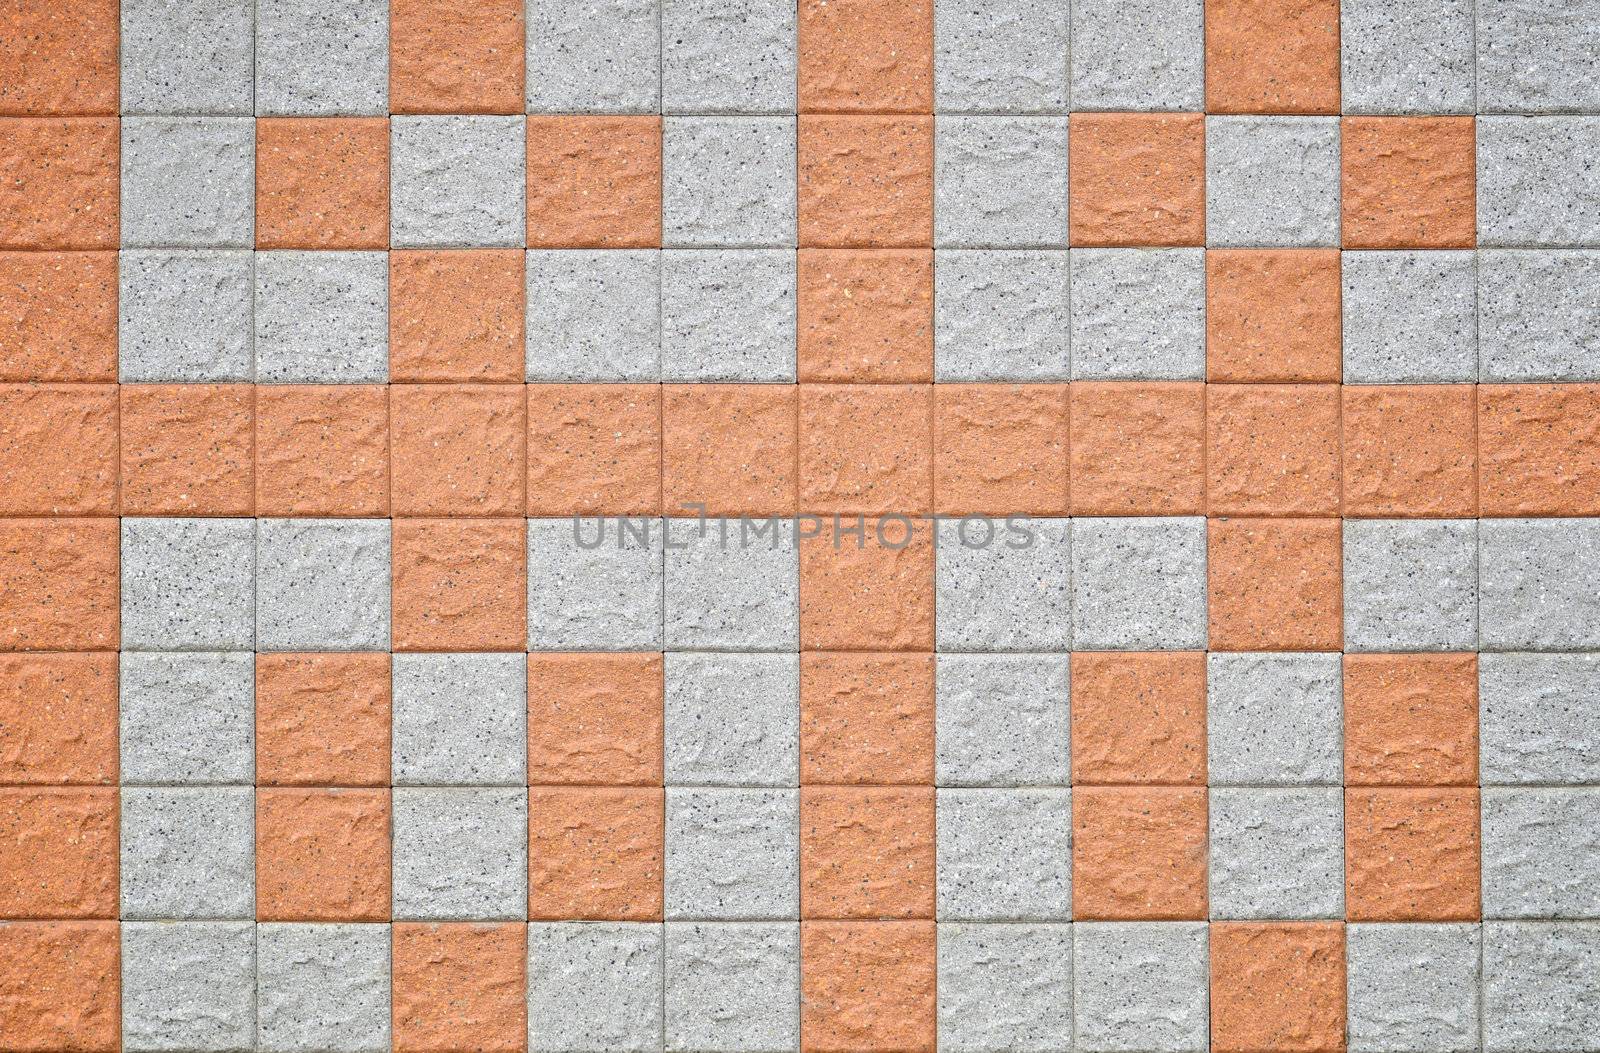 Mosaic tiles by antpkr